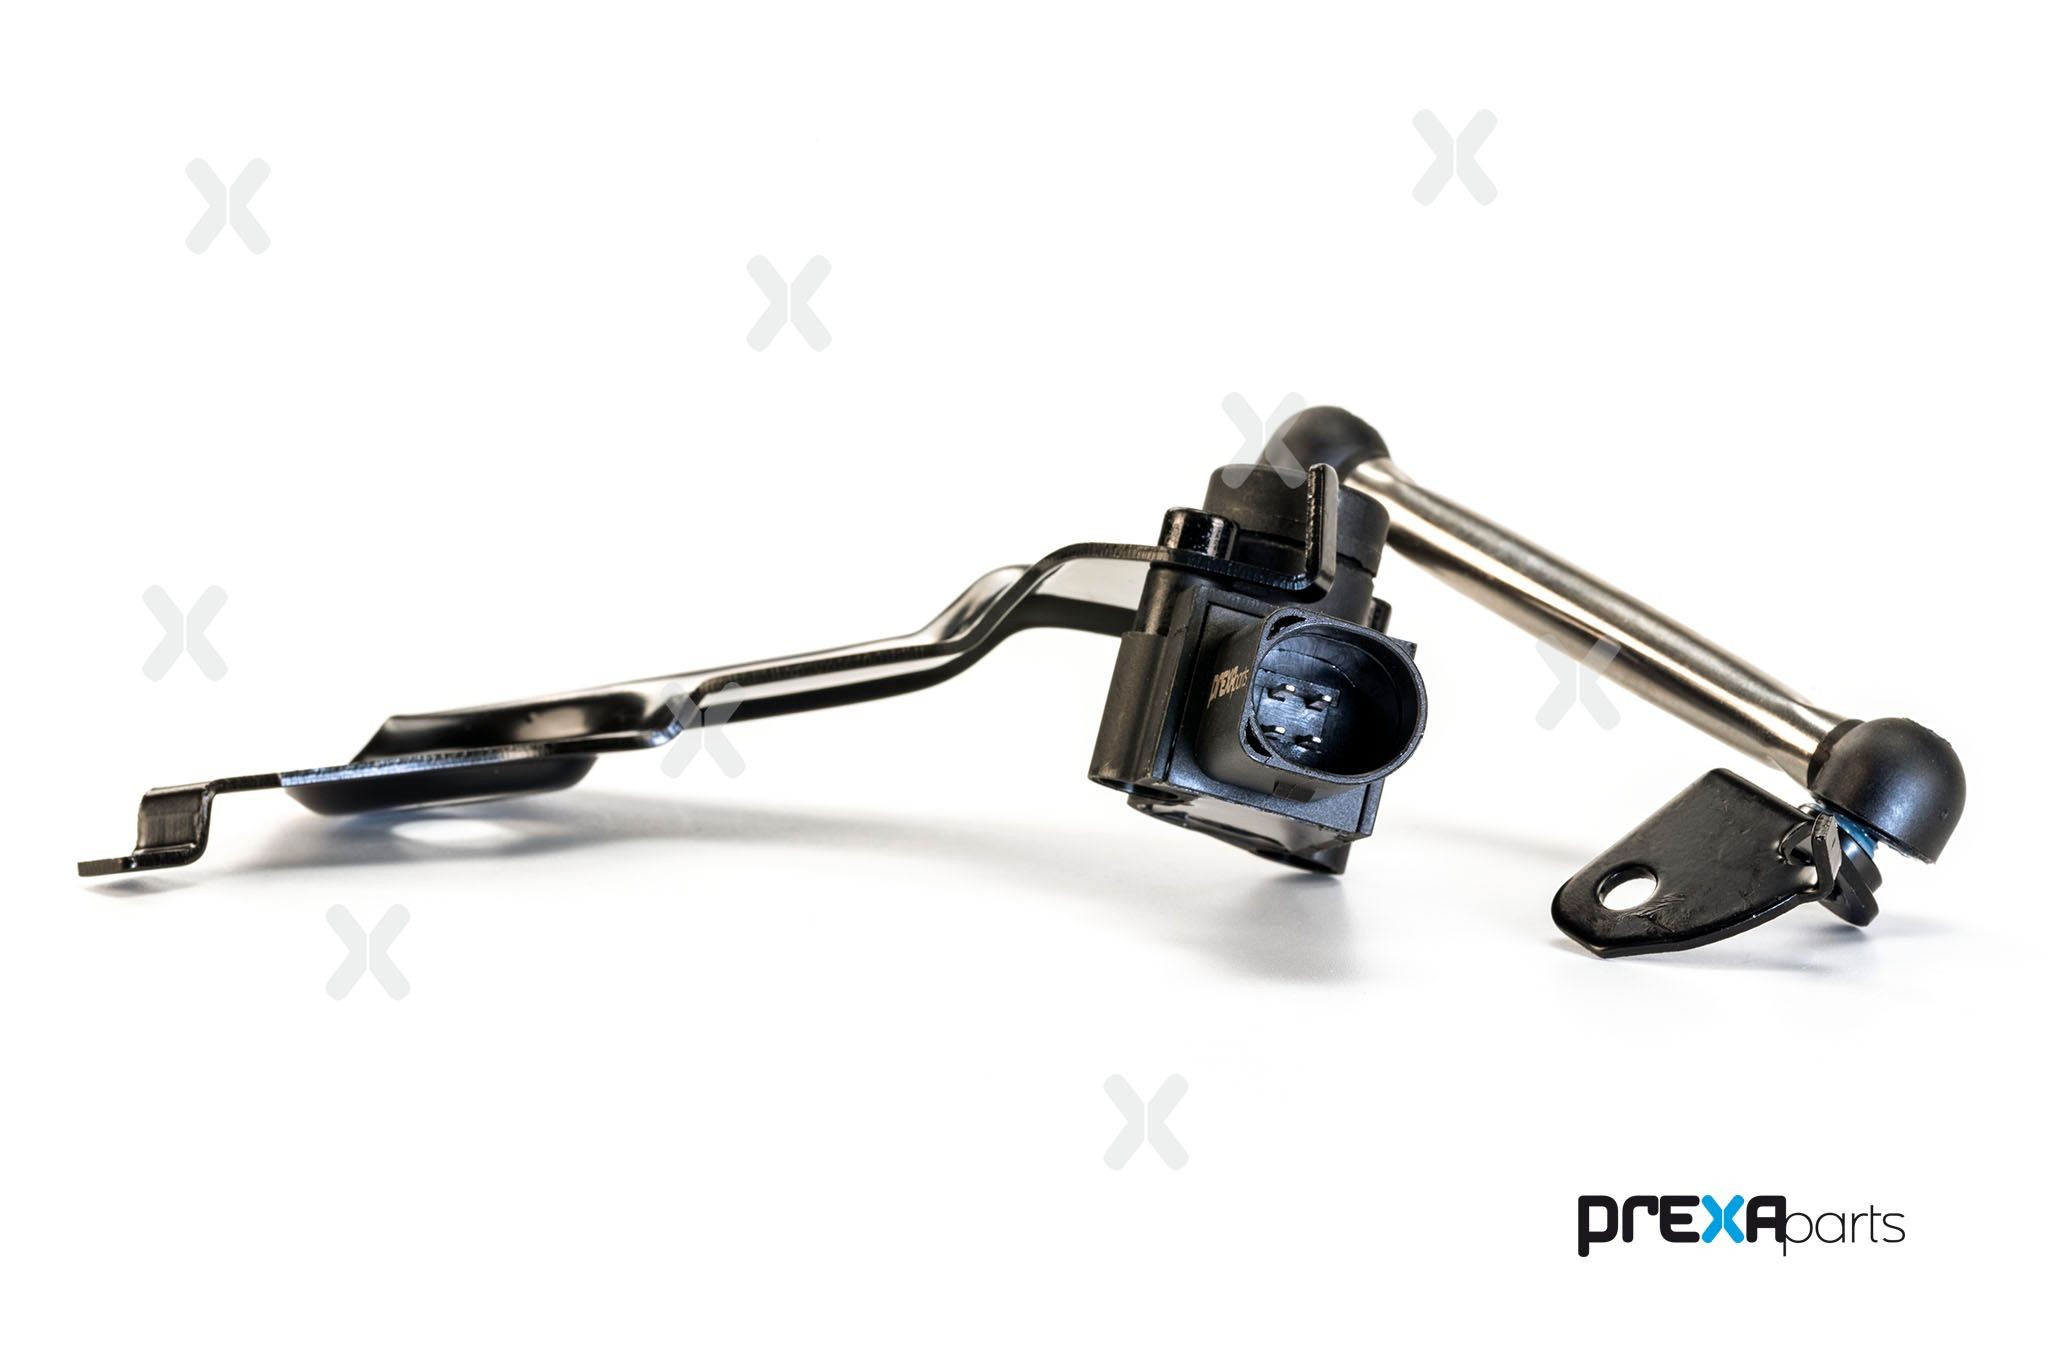 PREXAparts Sensor, Xenon light (headlight range adjustment) P150121 buy online